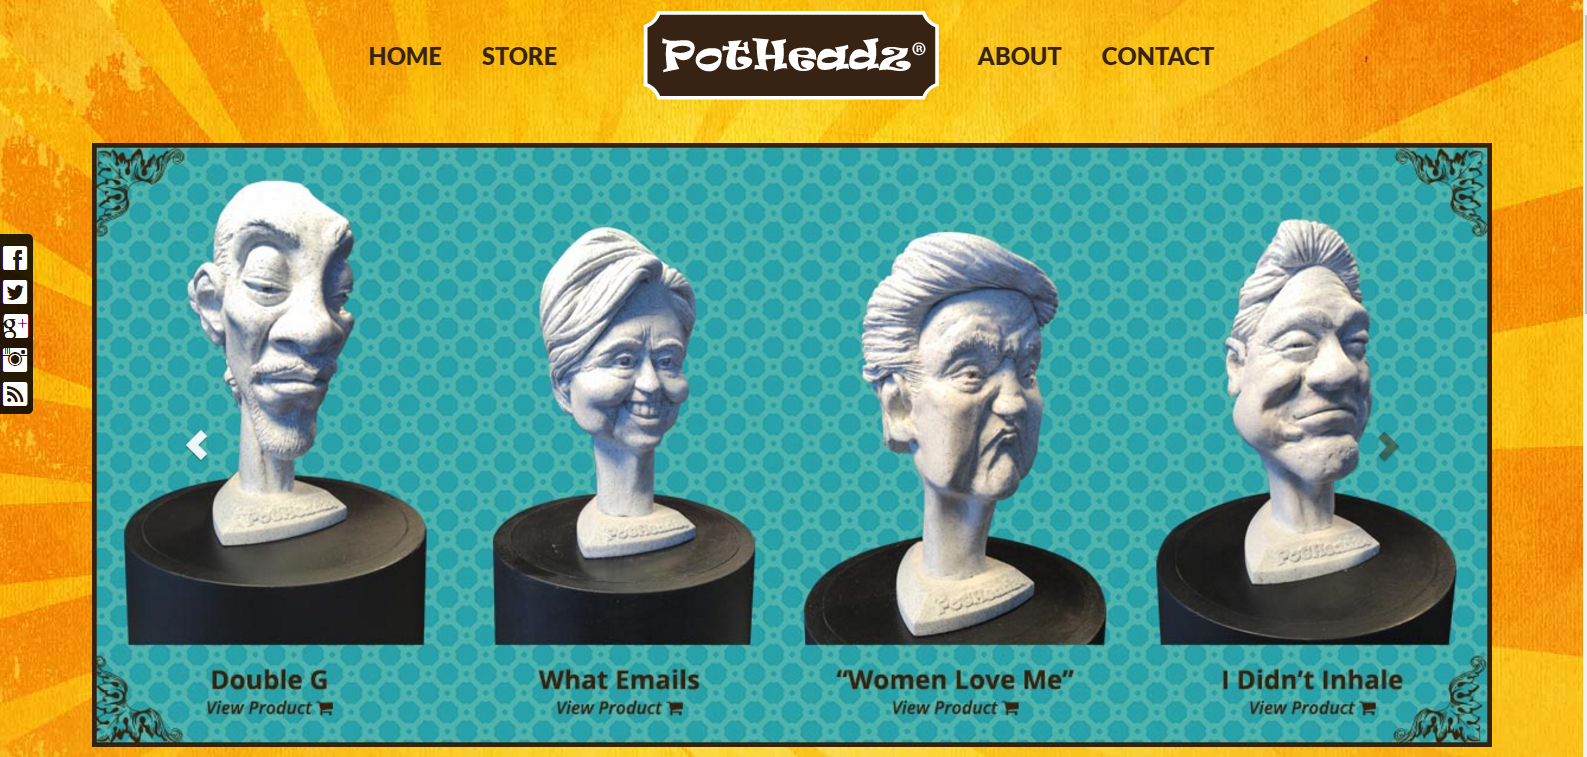 
New Website Launched: PotHeadz